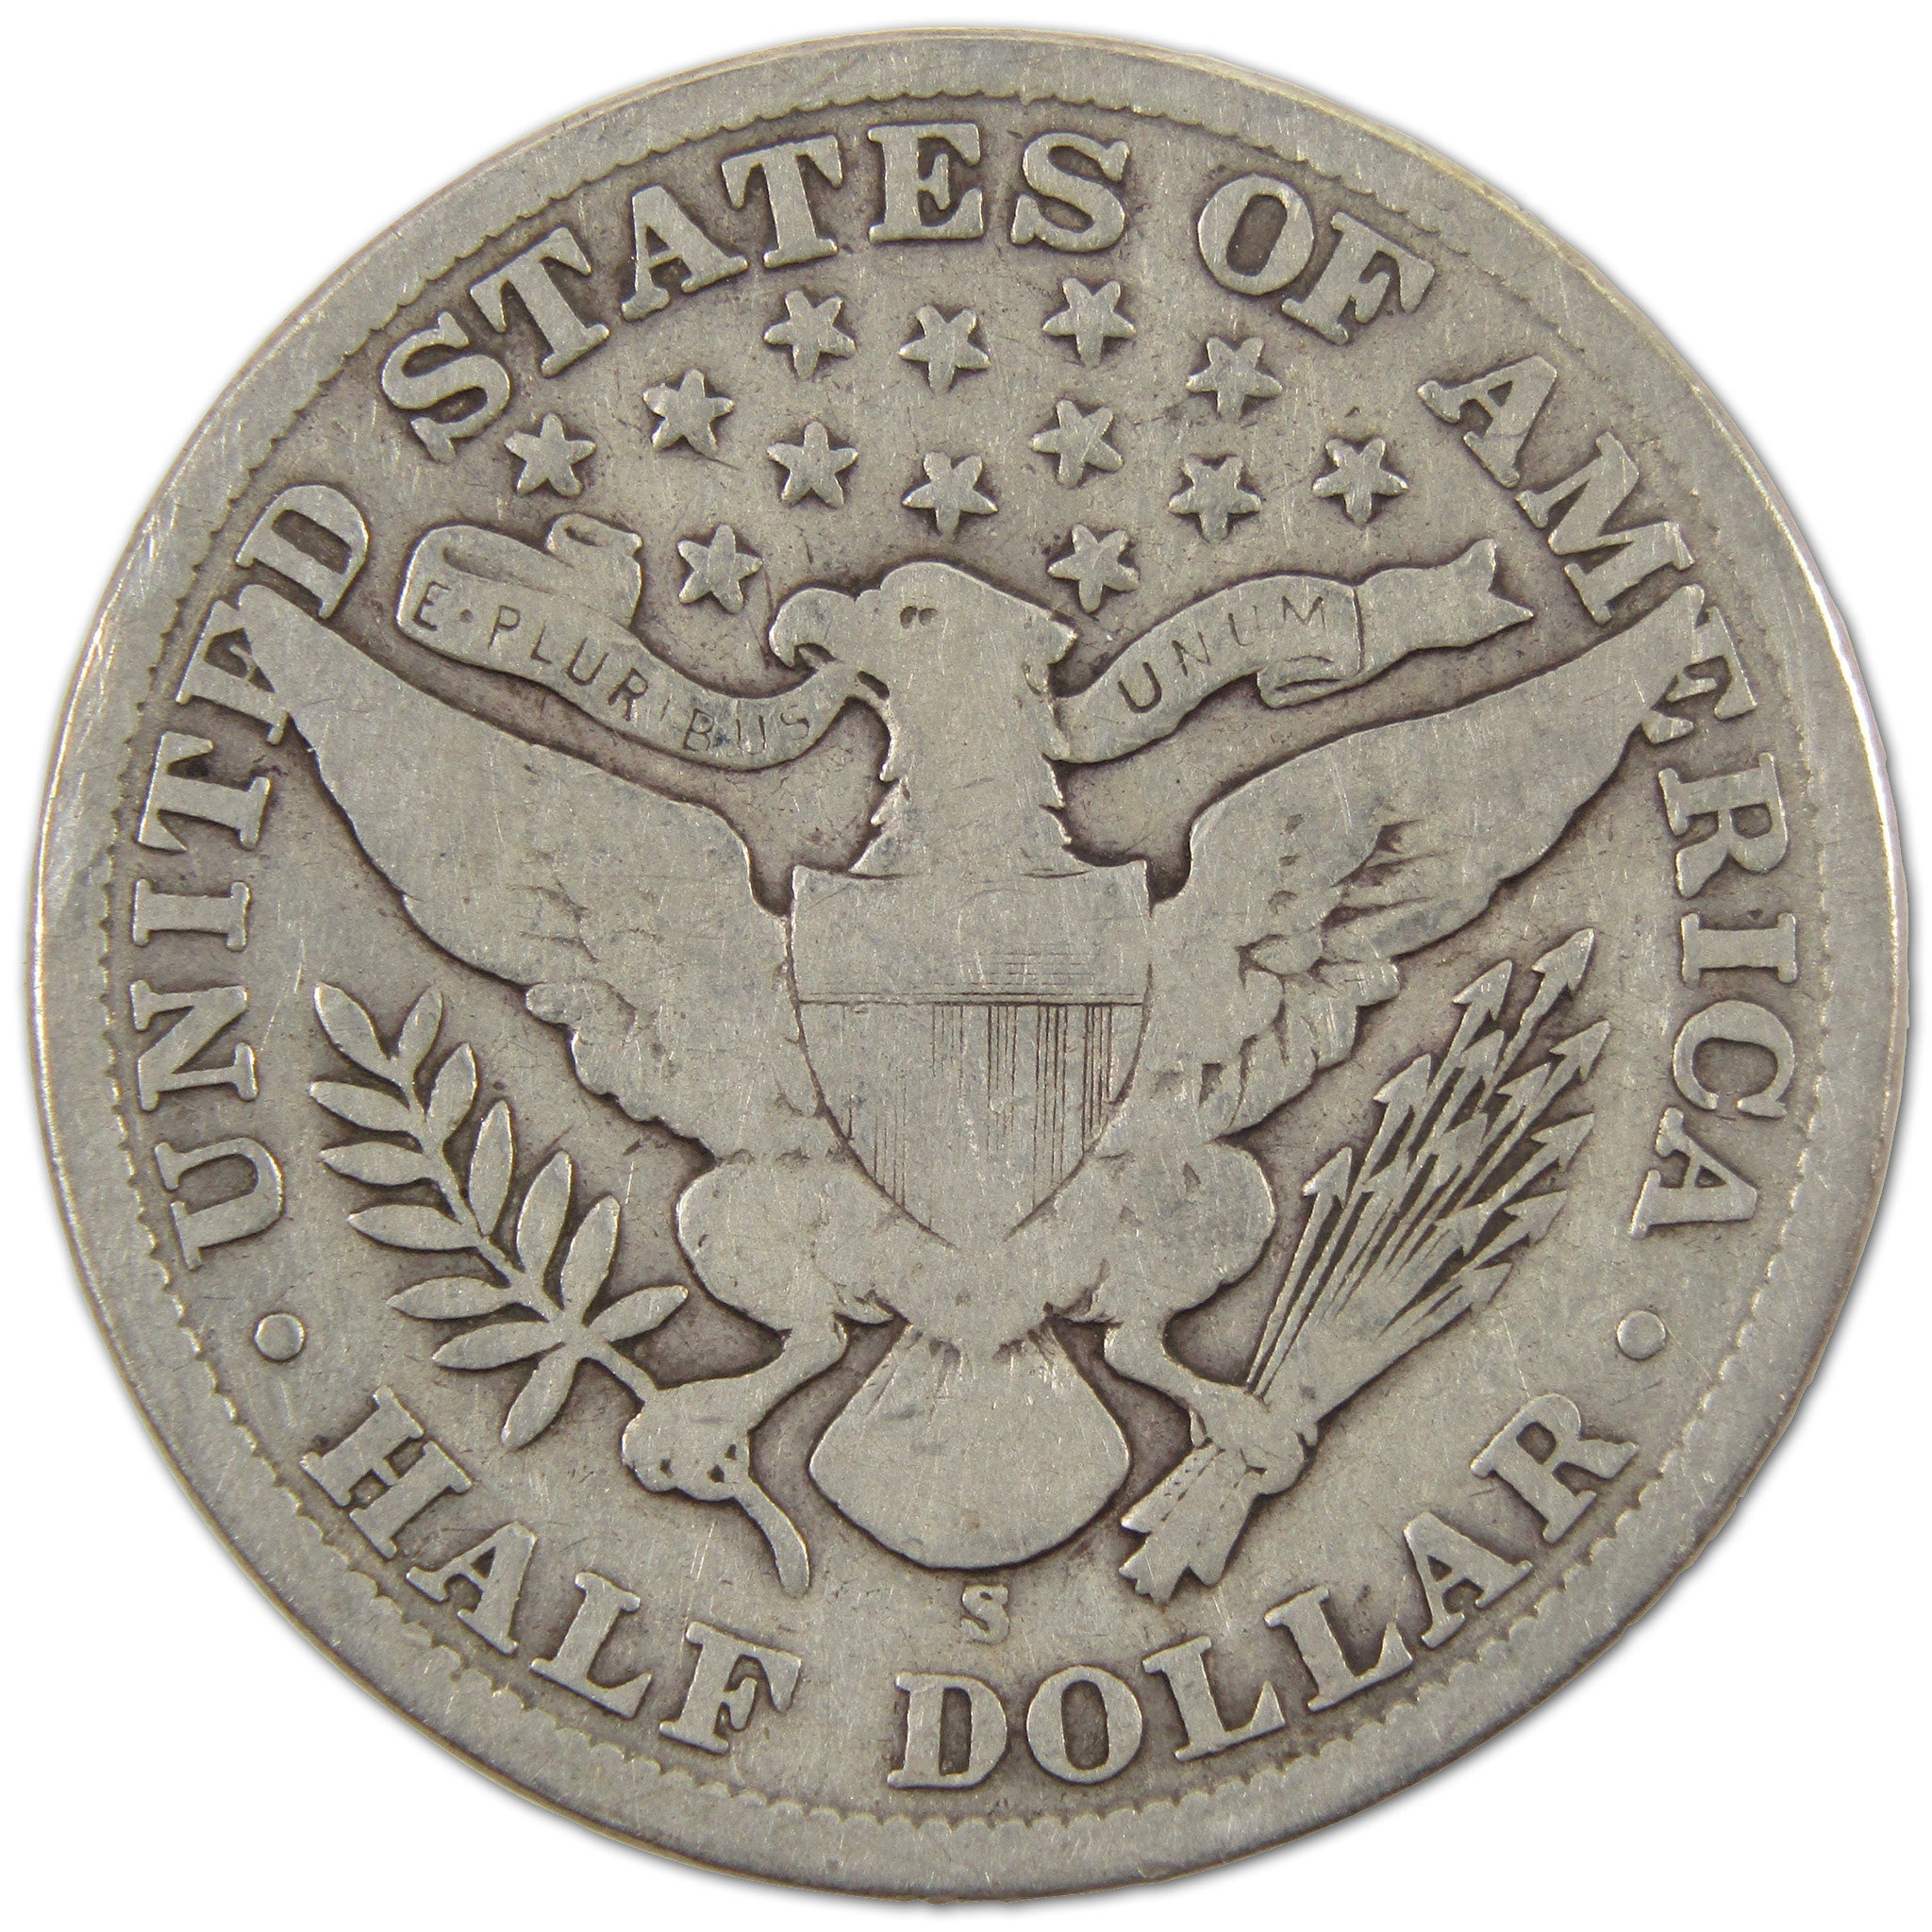 1908 S Barber Half Dollar VG Very Good Silver 50c Coin SKU:I10544